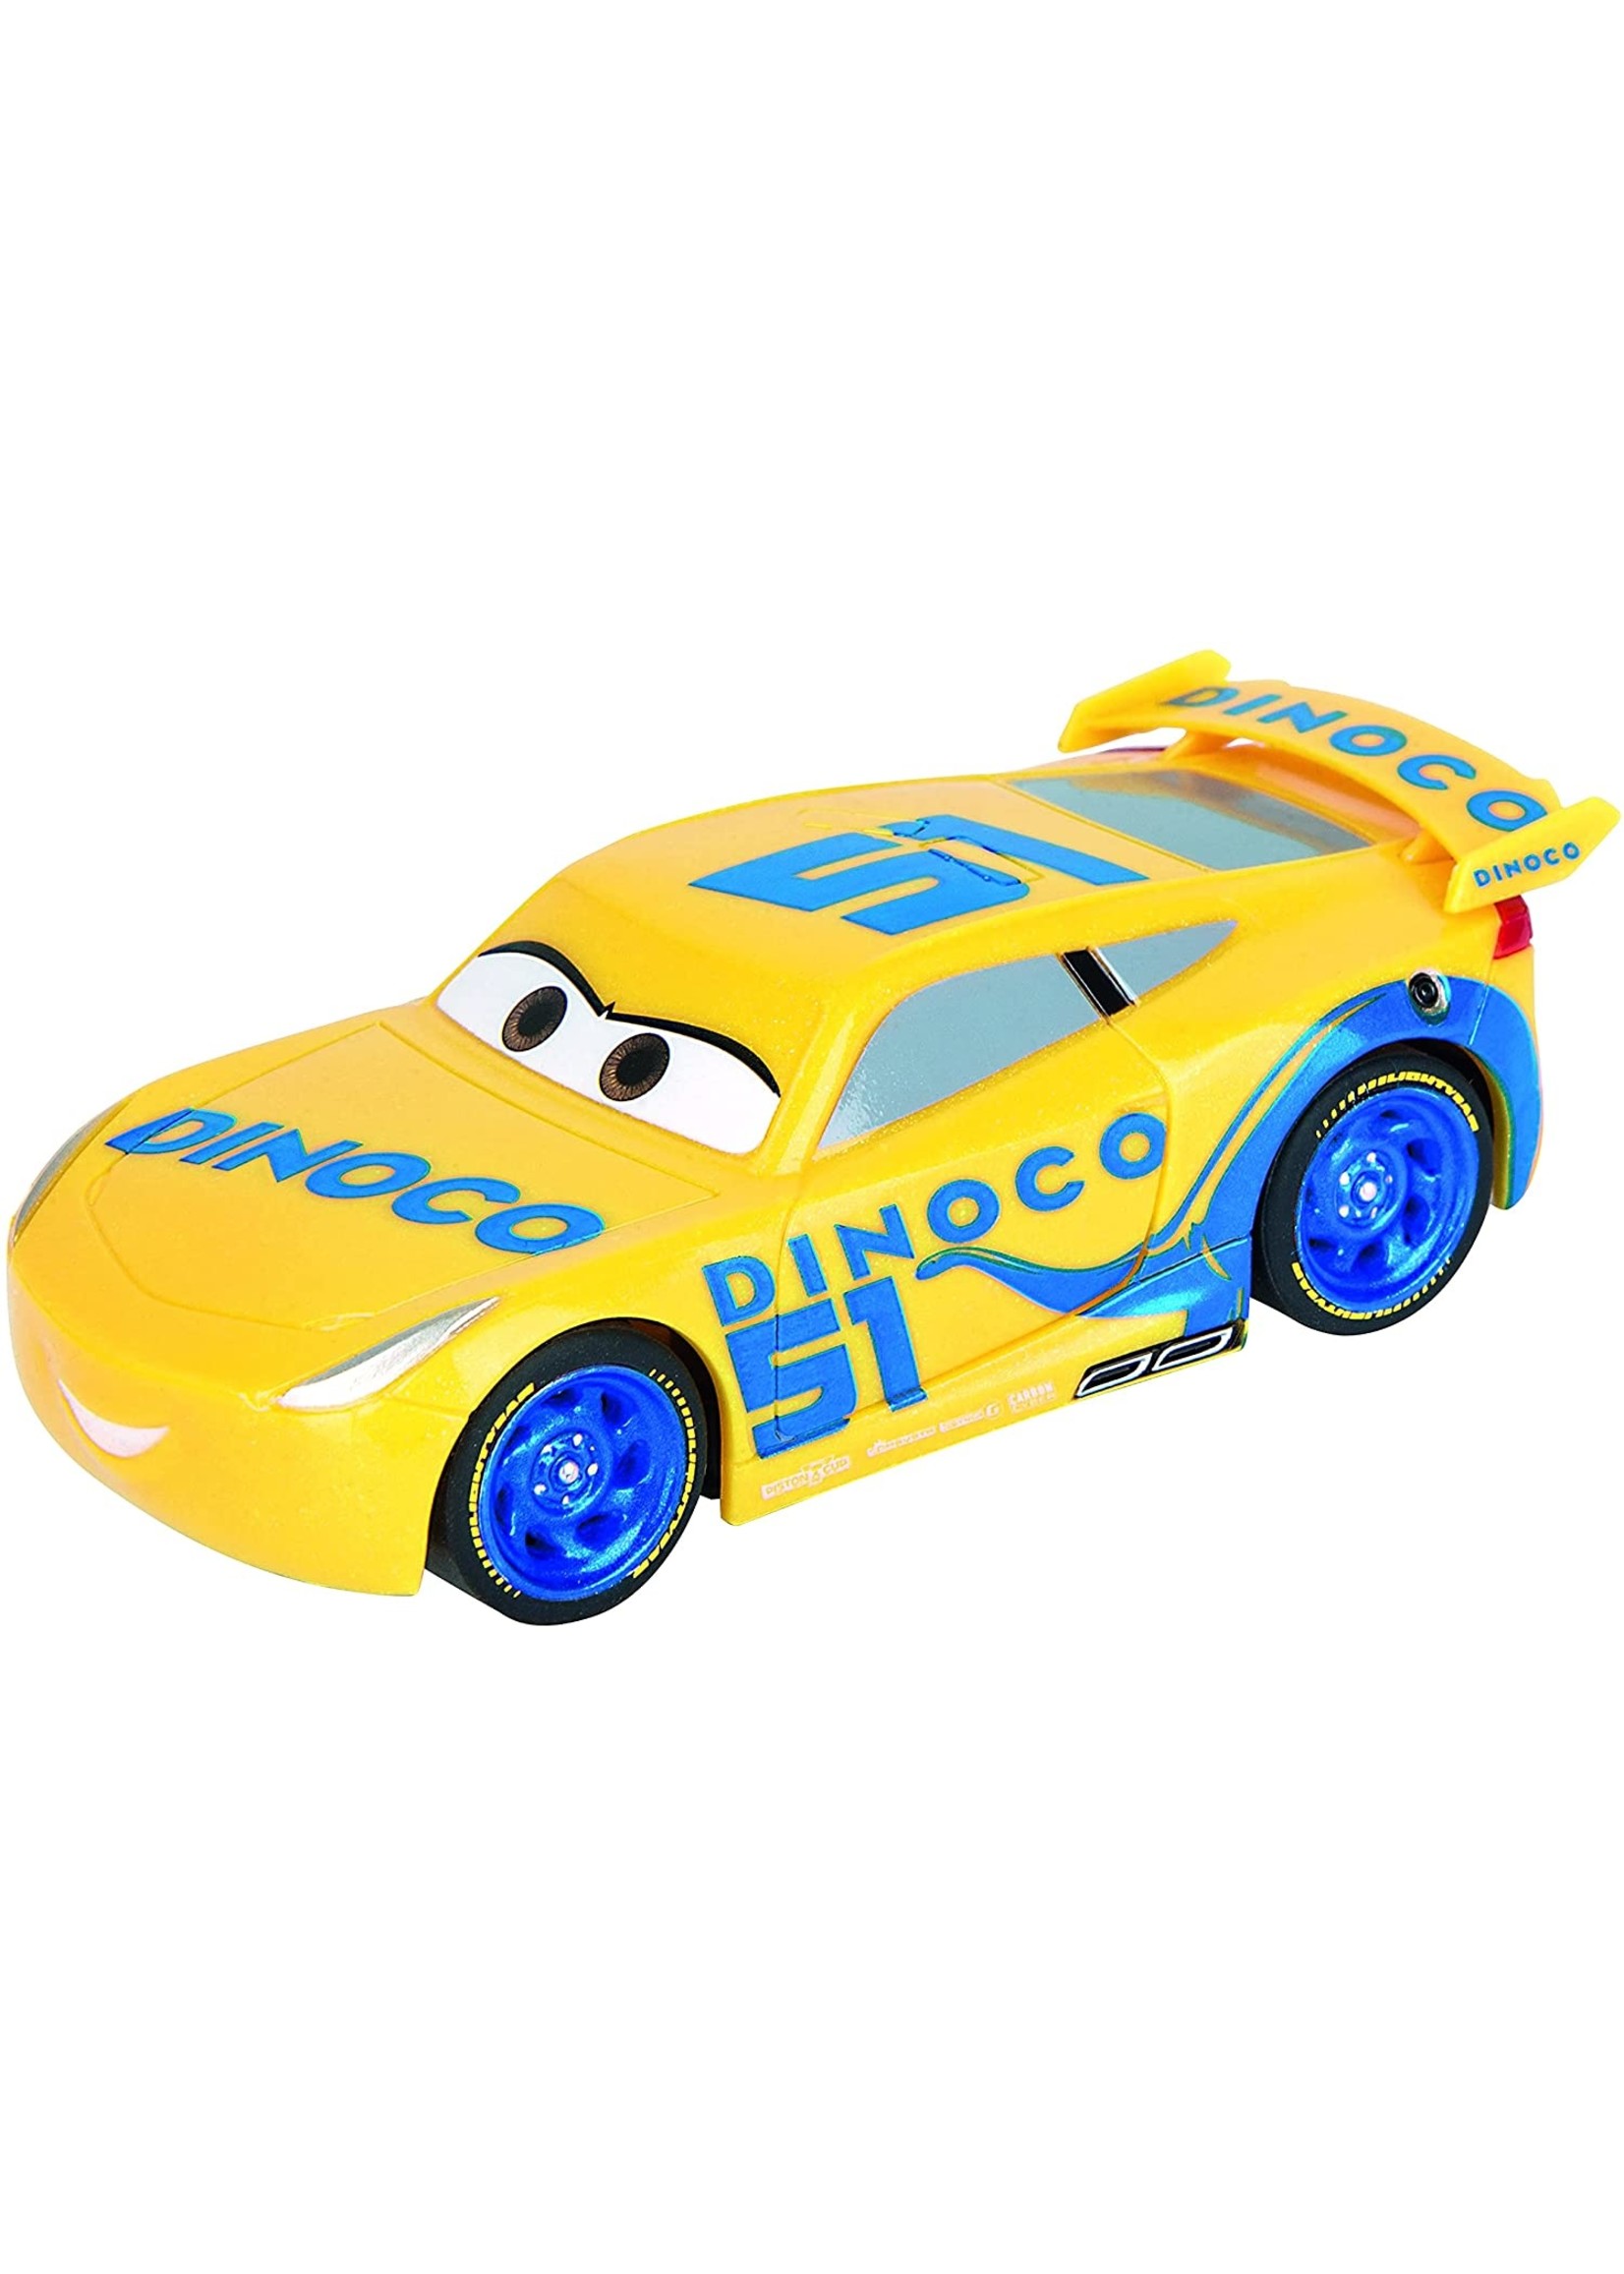 Carrera First - Disney Cars: Race of Friends Slot Car Set - Hub Hobby